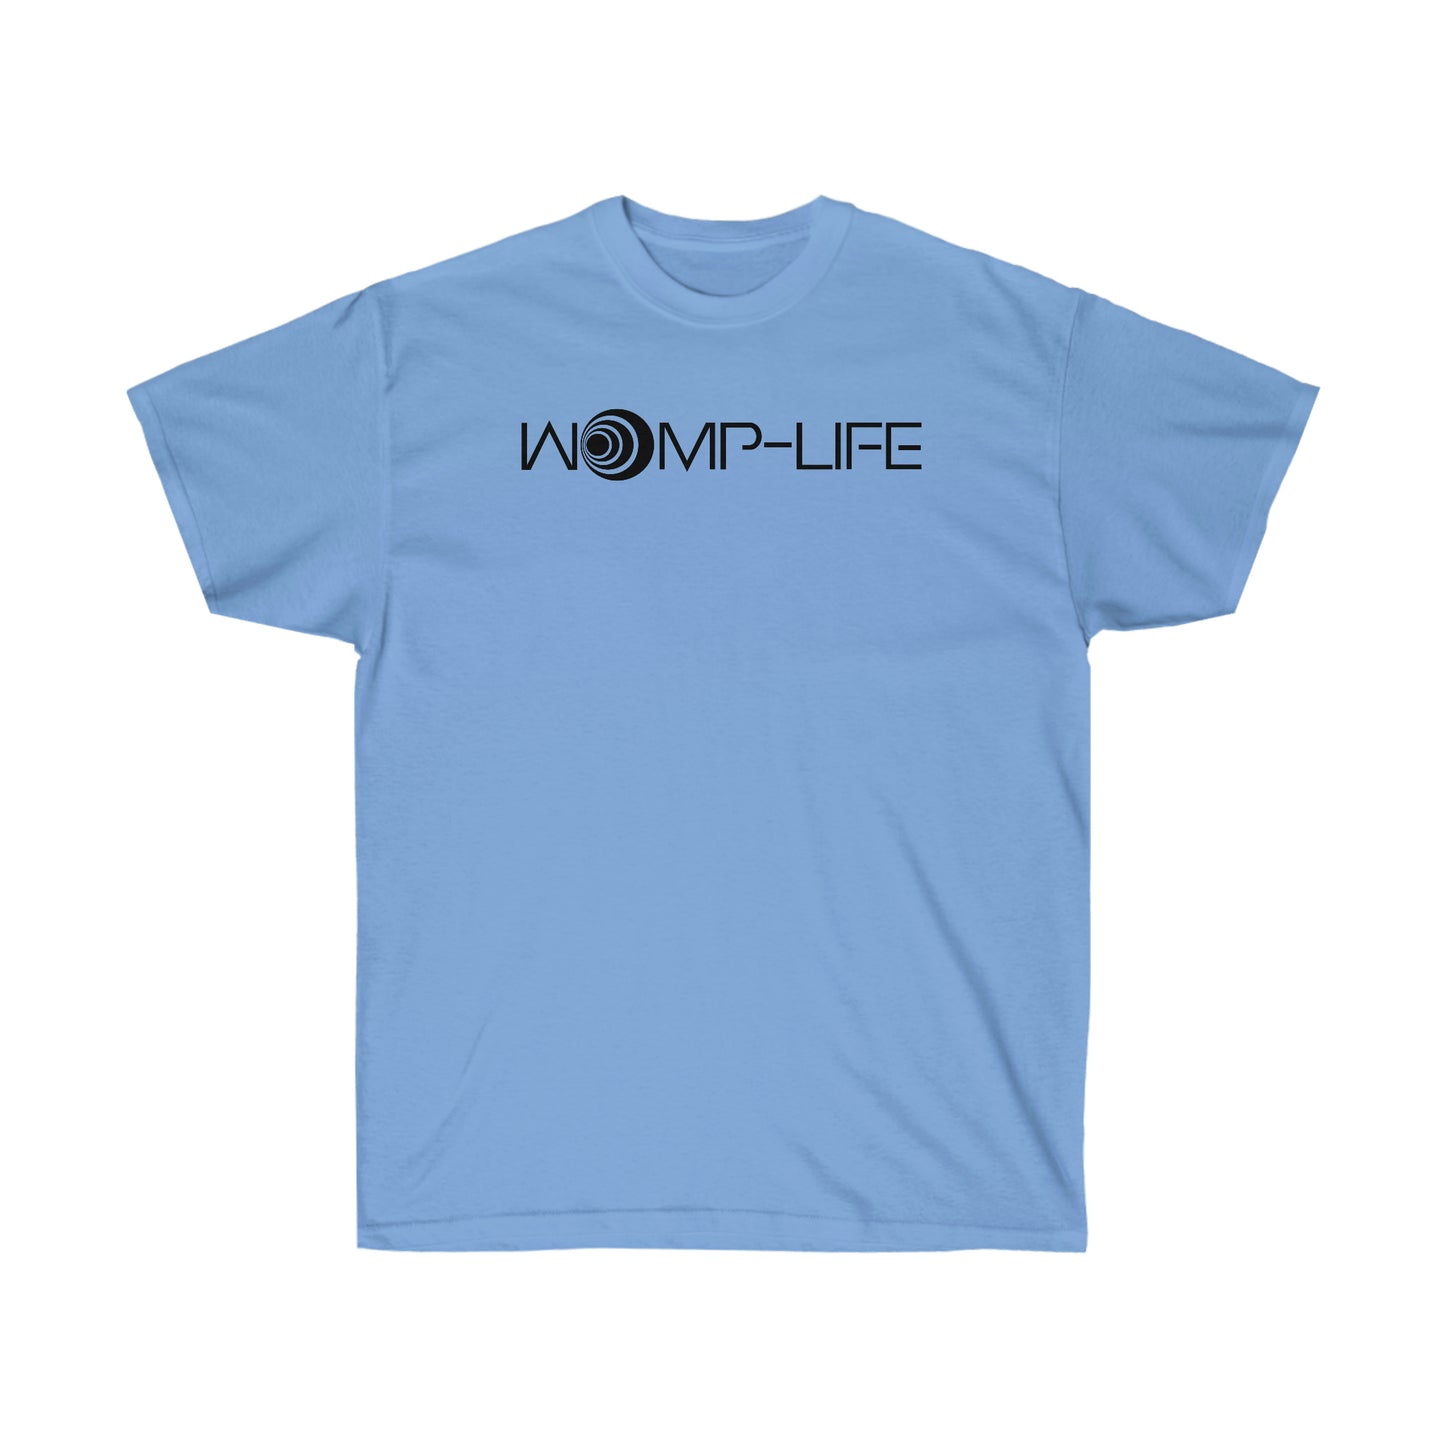 Womp-Life Unisex Ultra Cotton Tee